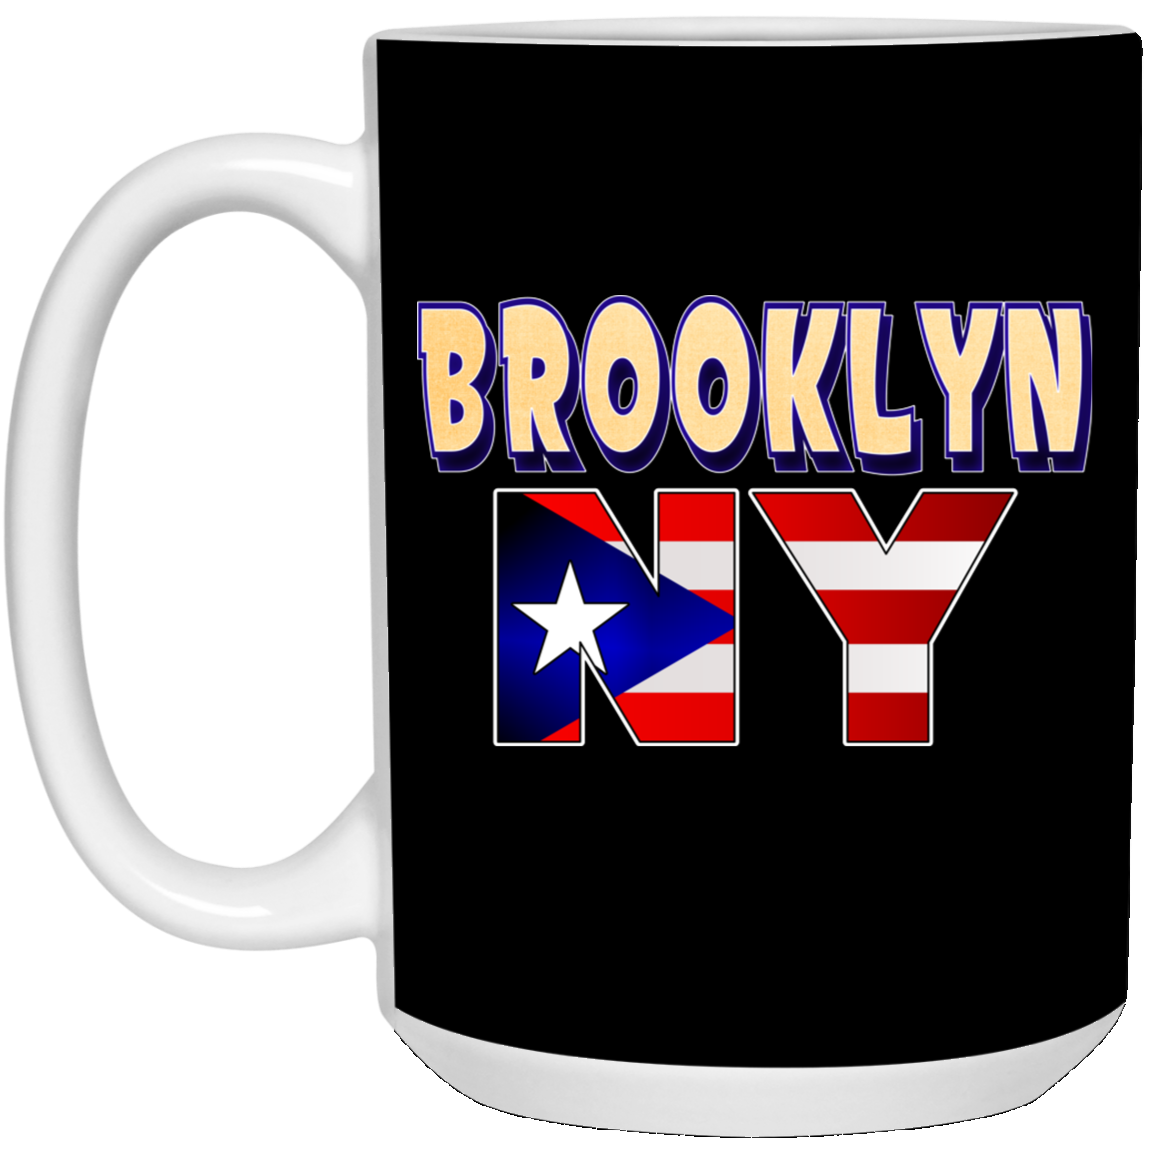 Brooklyn NY 15 oz. White Mug - Puerto Rican Pride